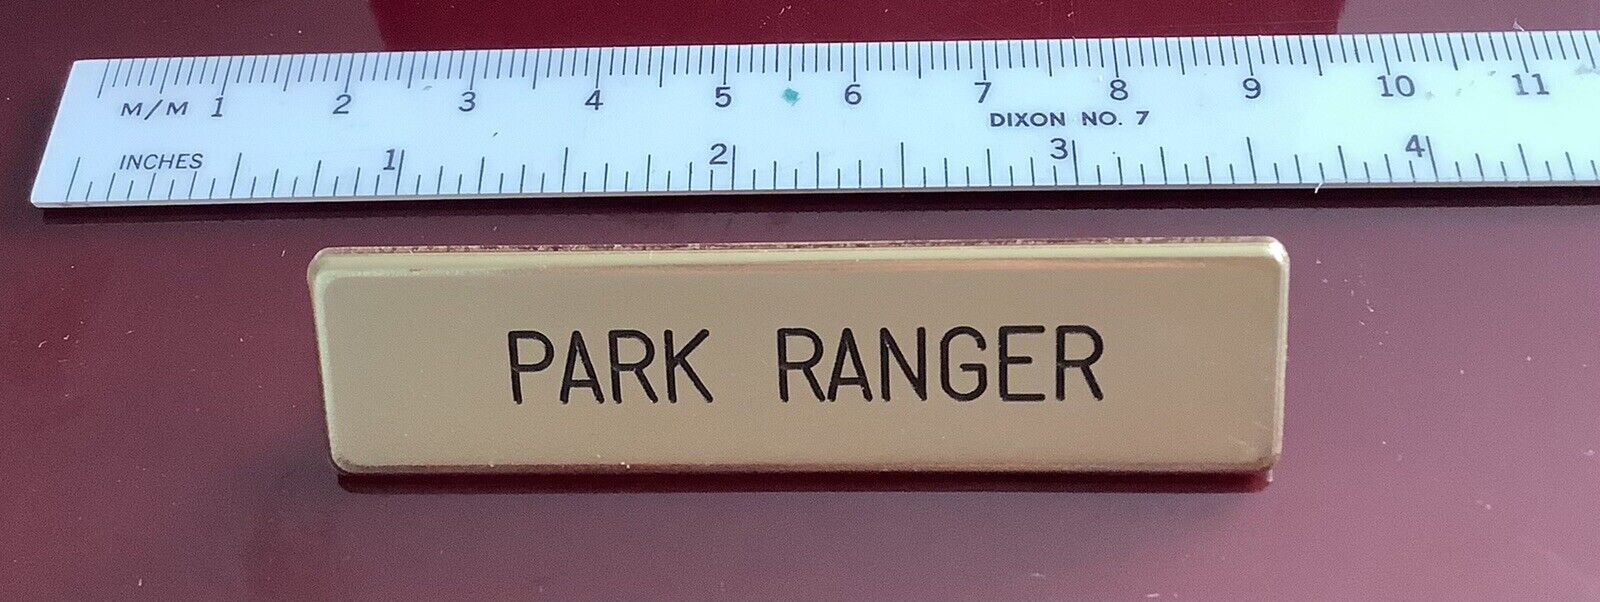 National Park Service Park Ranger Name Bar